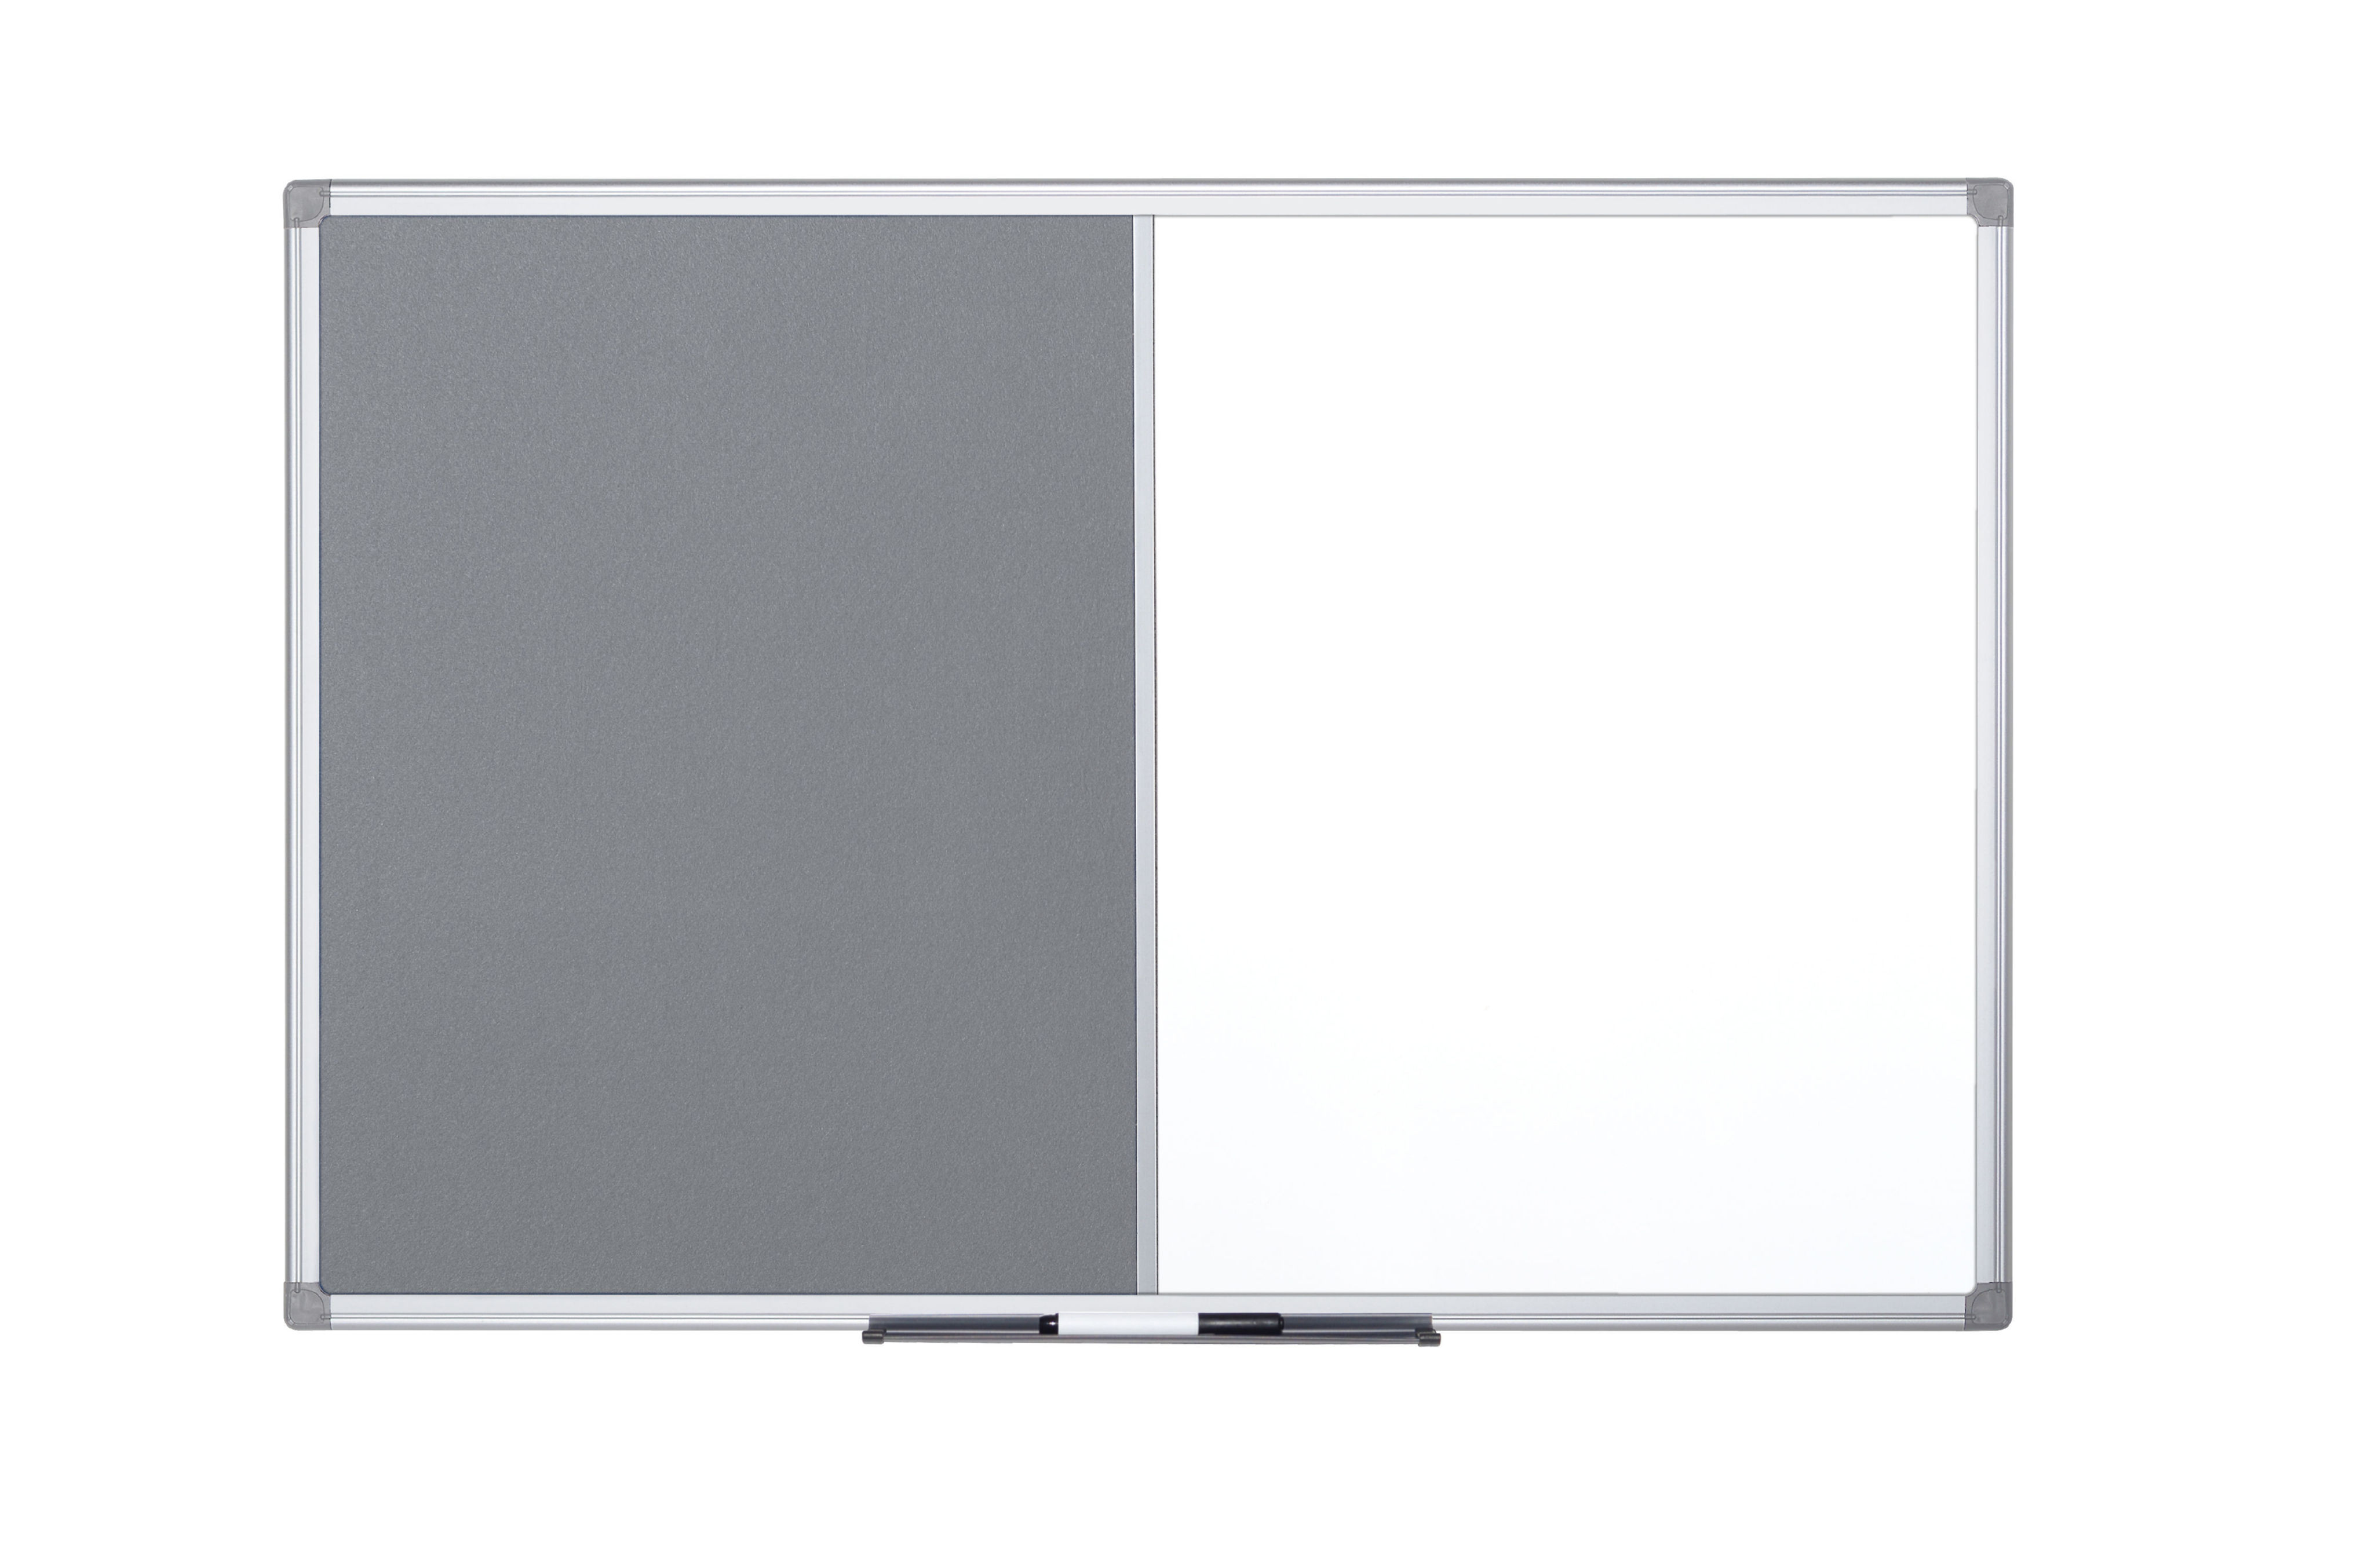 comboAlu Frame Board GY 120x90cm